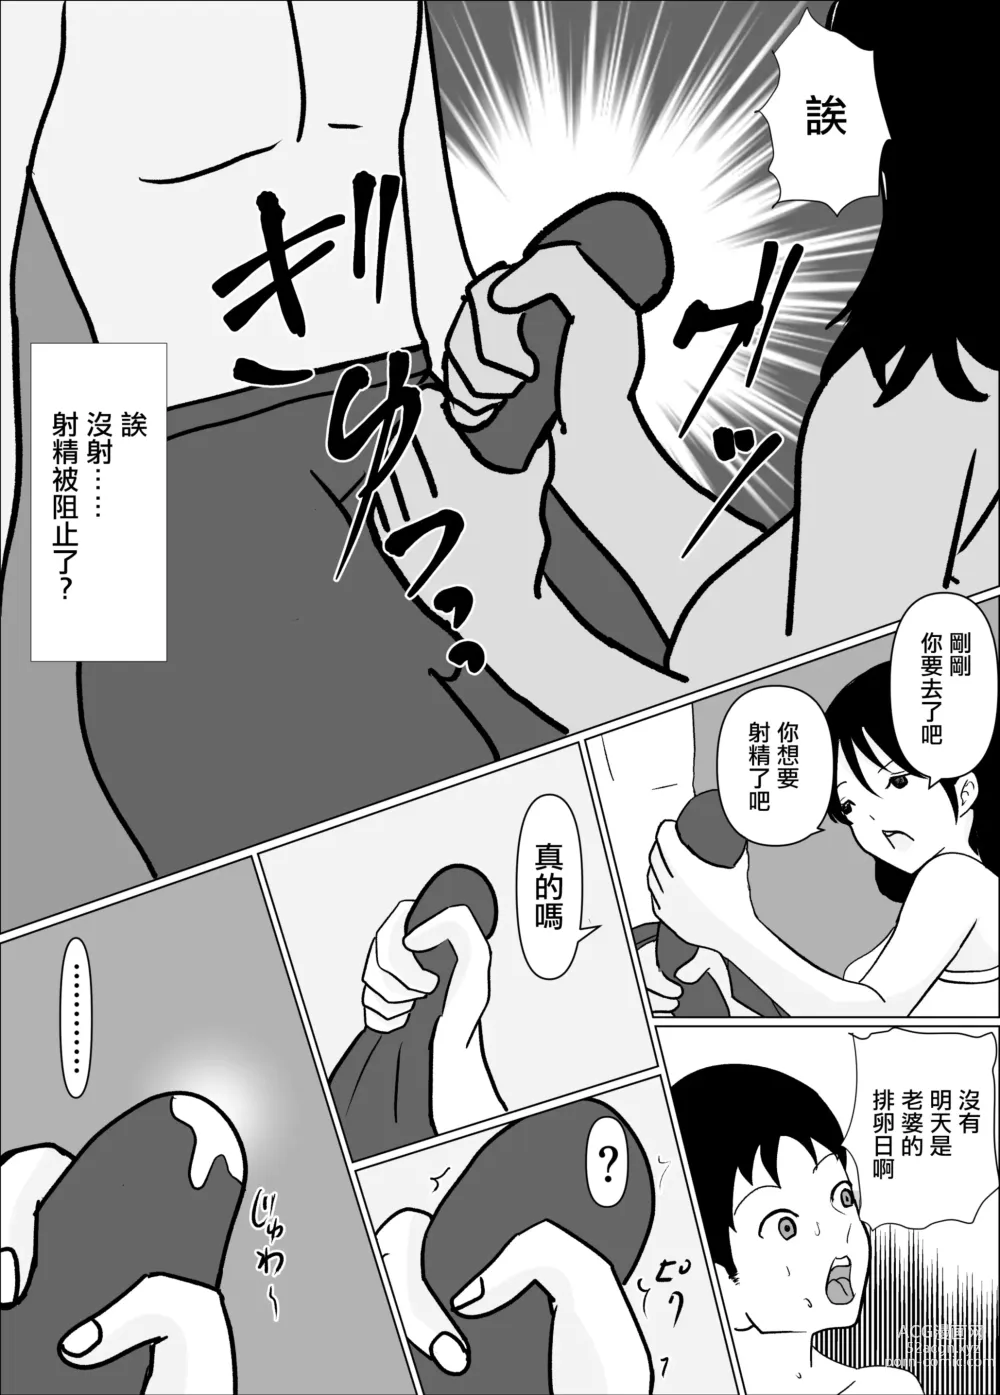 Page 7 of doujinshi 為了在妻子的排卵日授精而攢的精子被丈母娘看上了